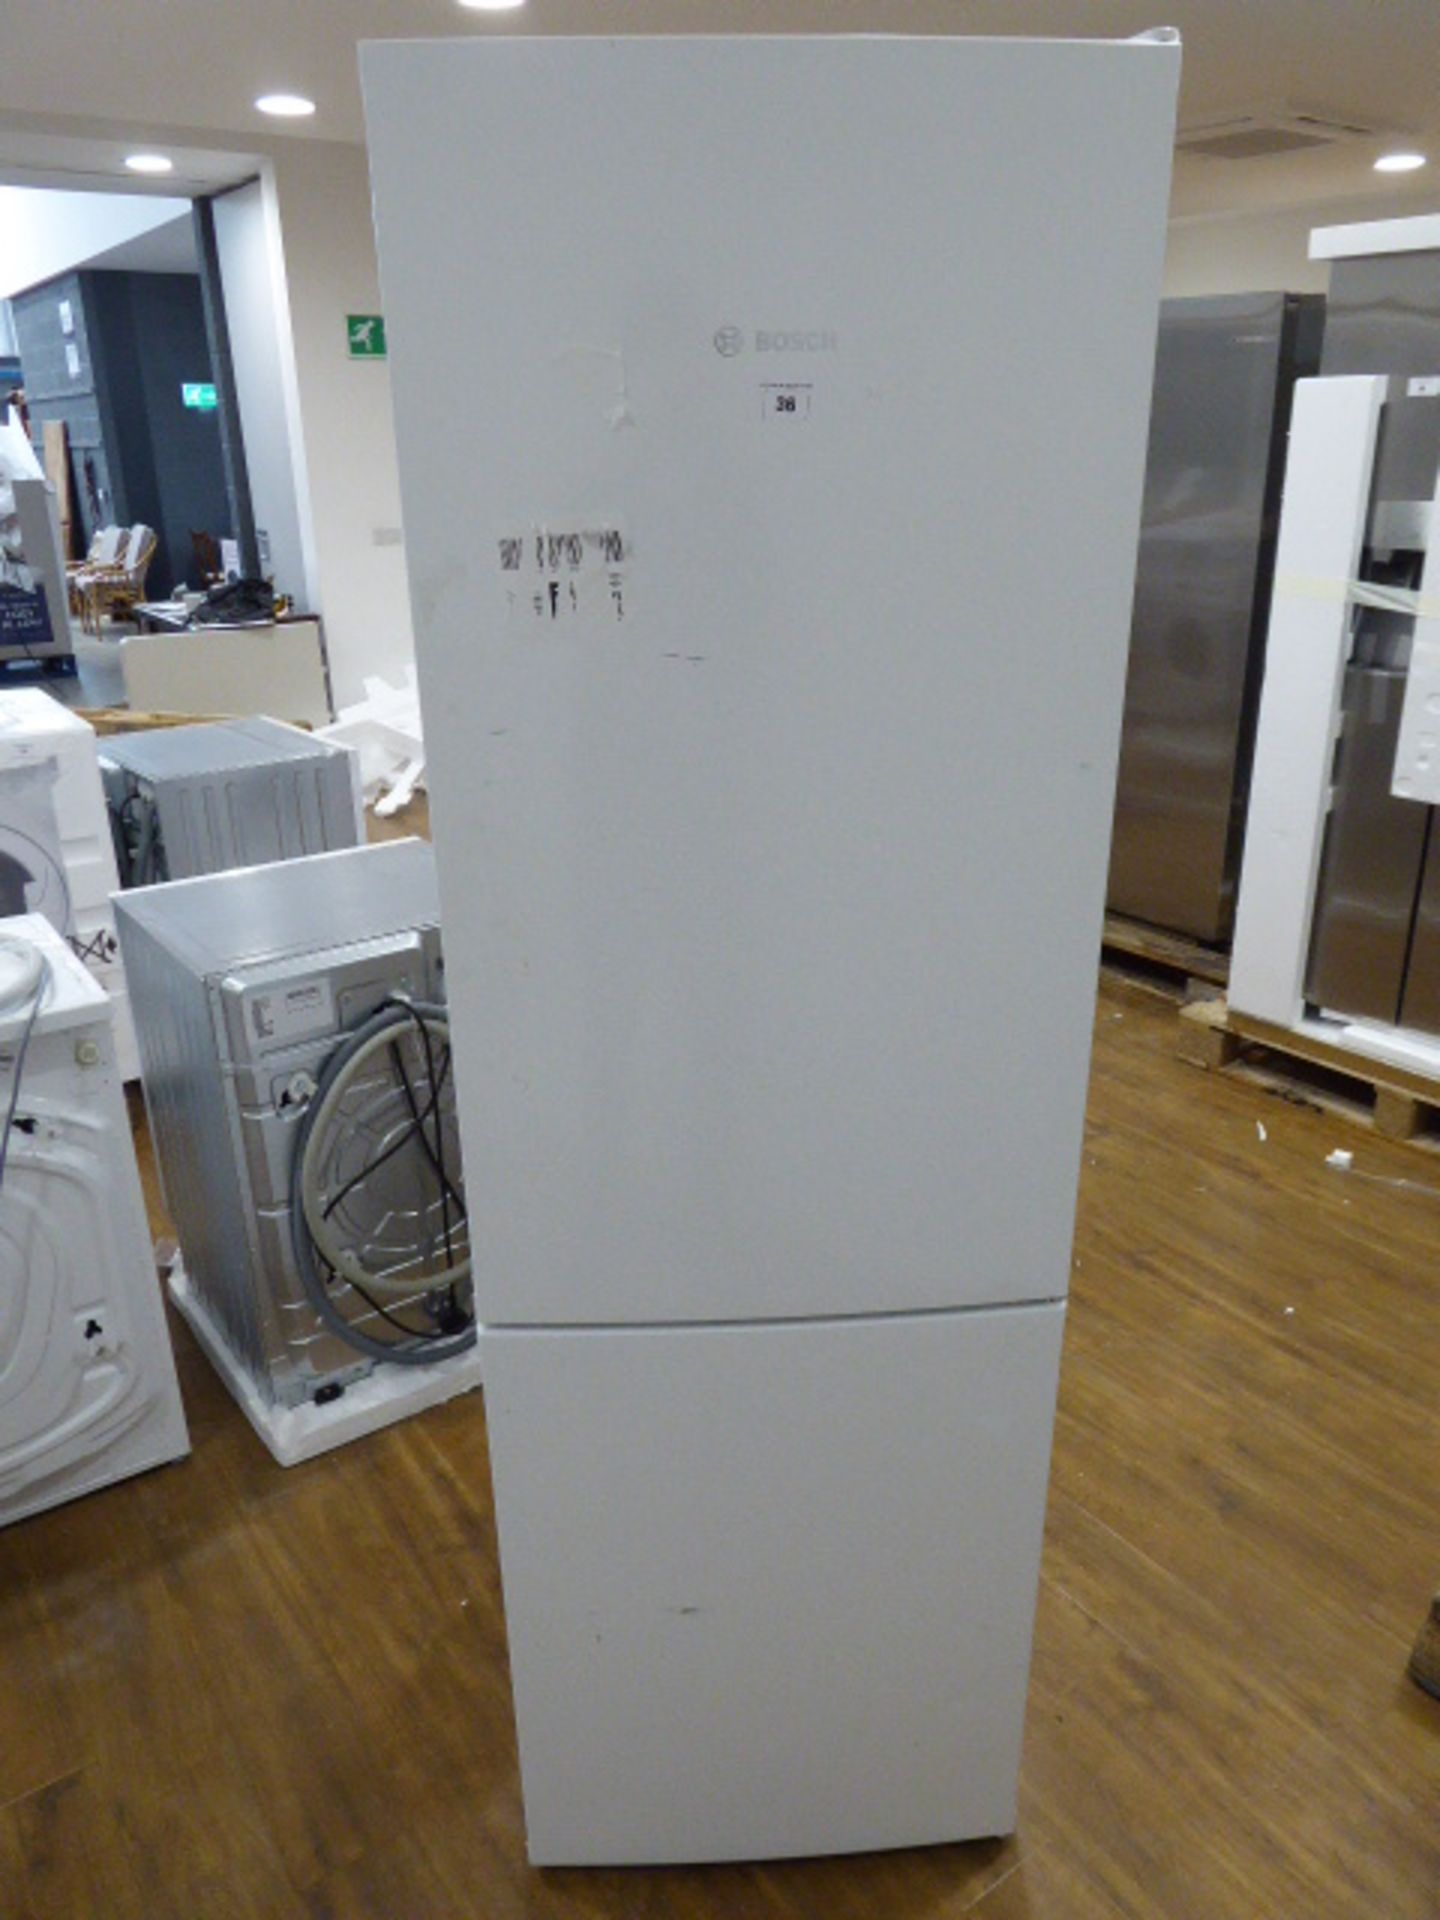 KGN36VWEAGB Bosch Free-standing fridge-freezer